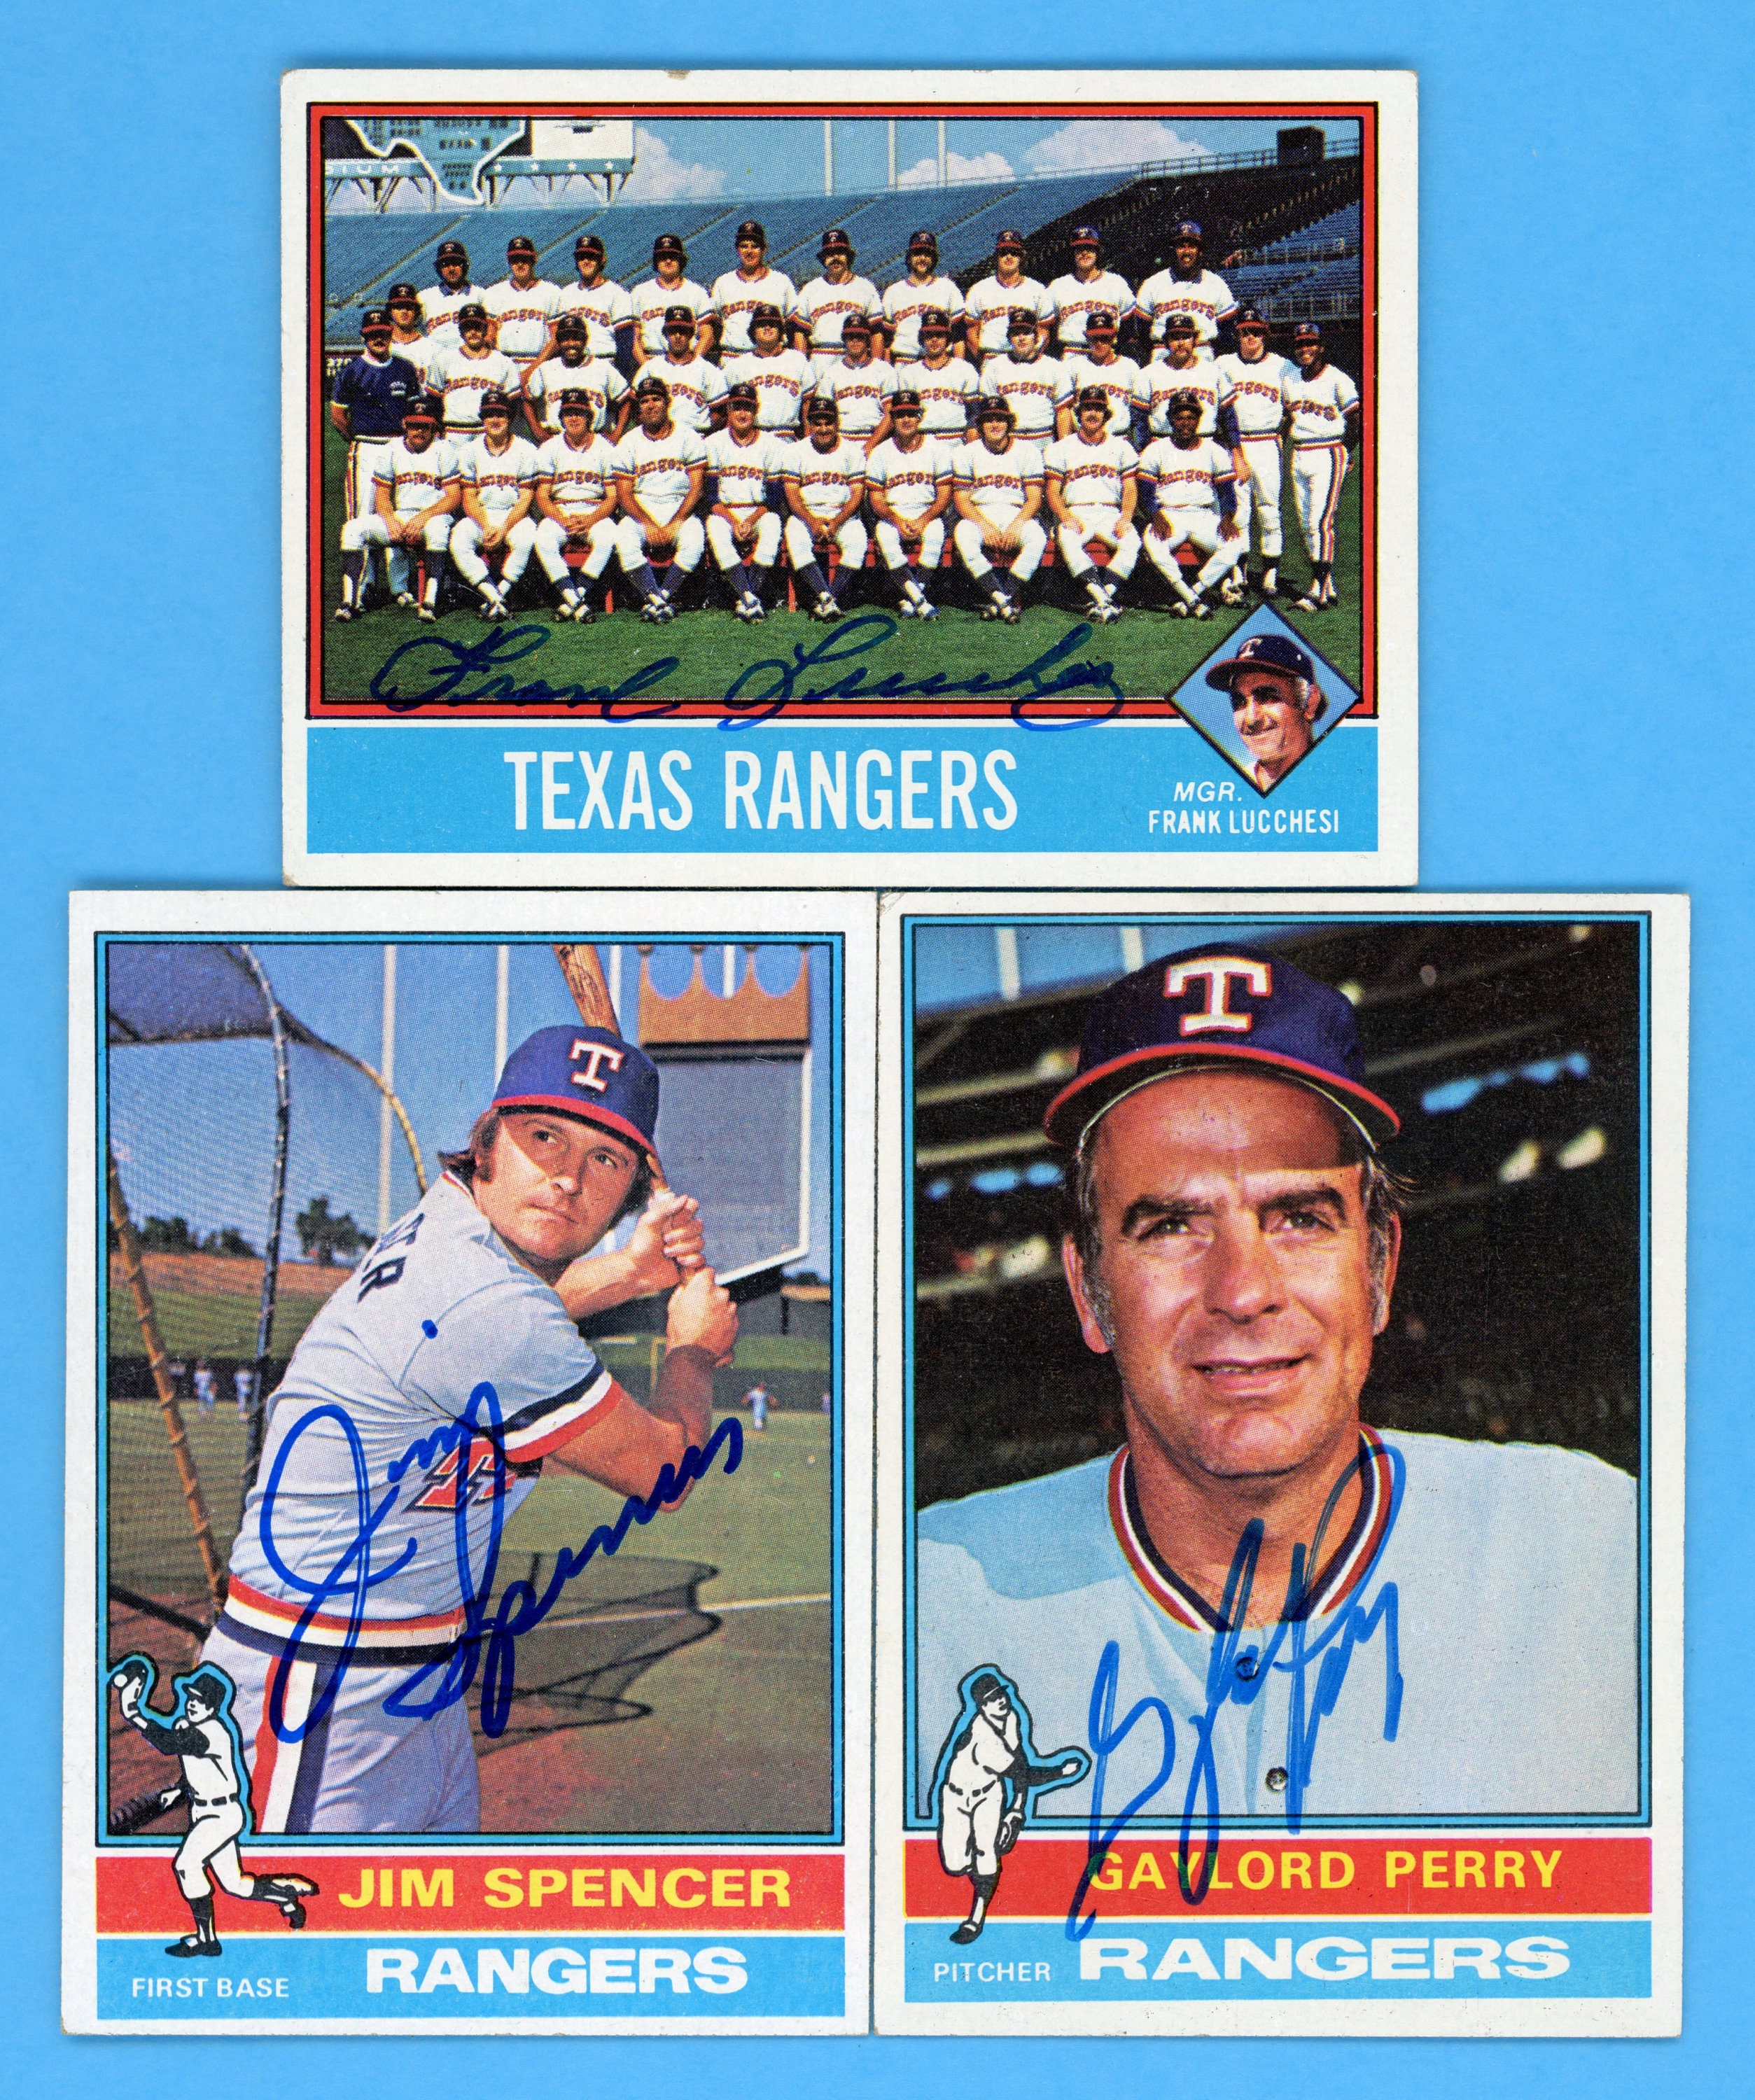 Texas Rangers/Complete 2020 Topps Rangers Baseball Team Set! (20 Cards)  Series 1 and 2. Includes a bonus Nolan Ryan Card!